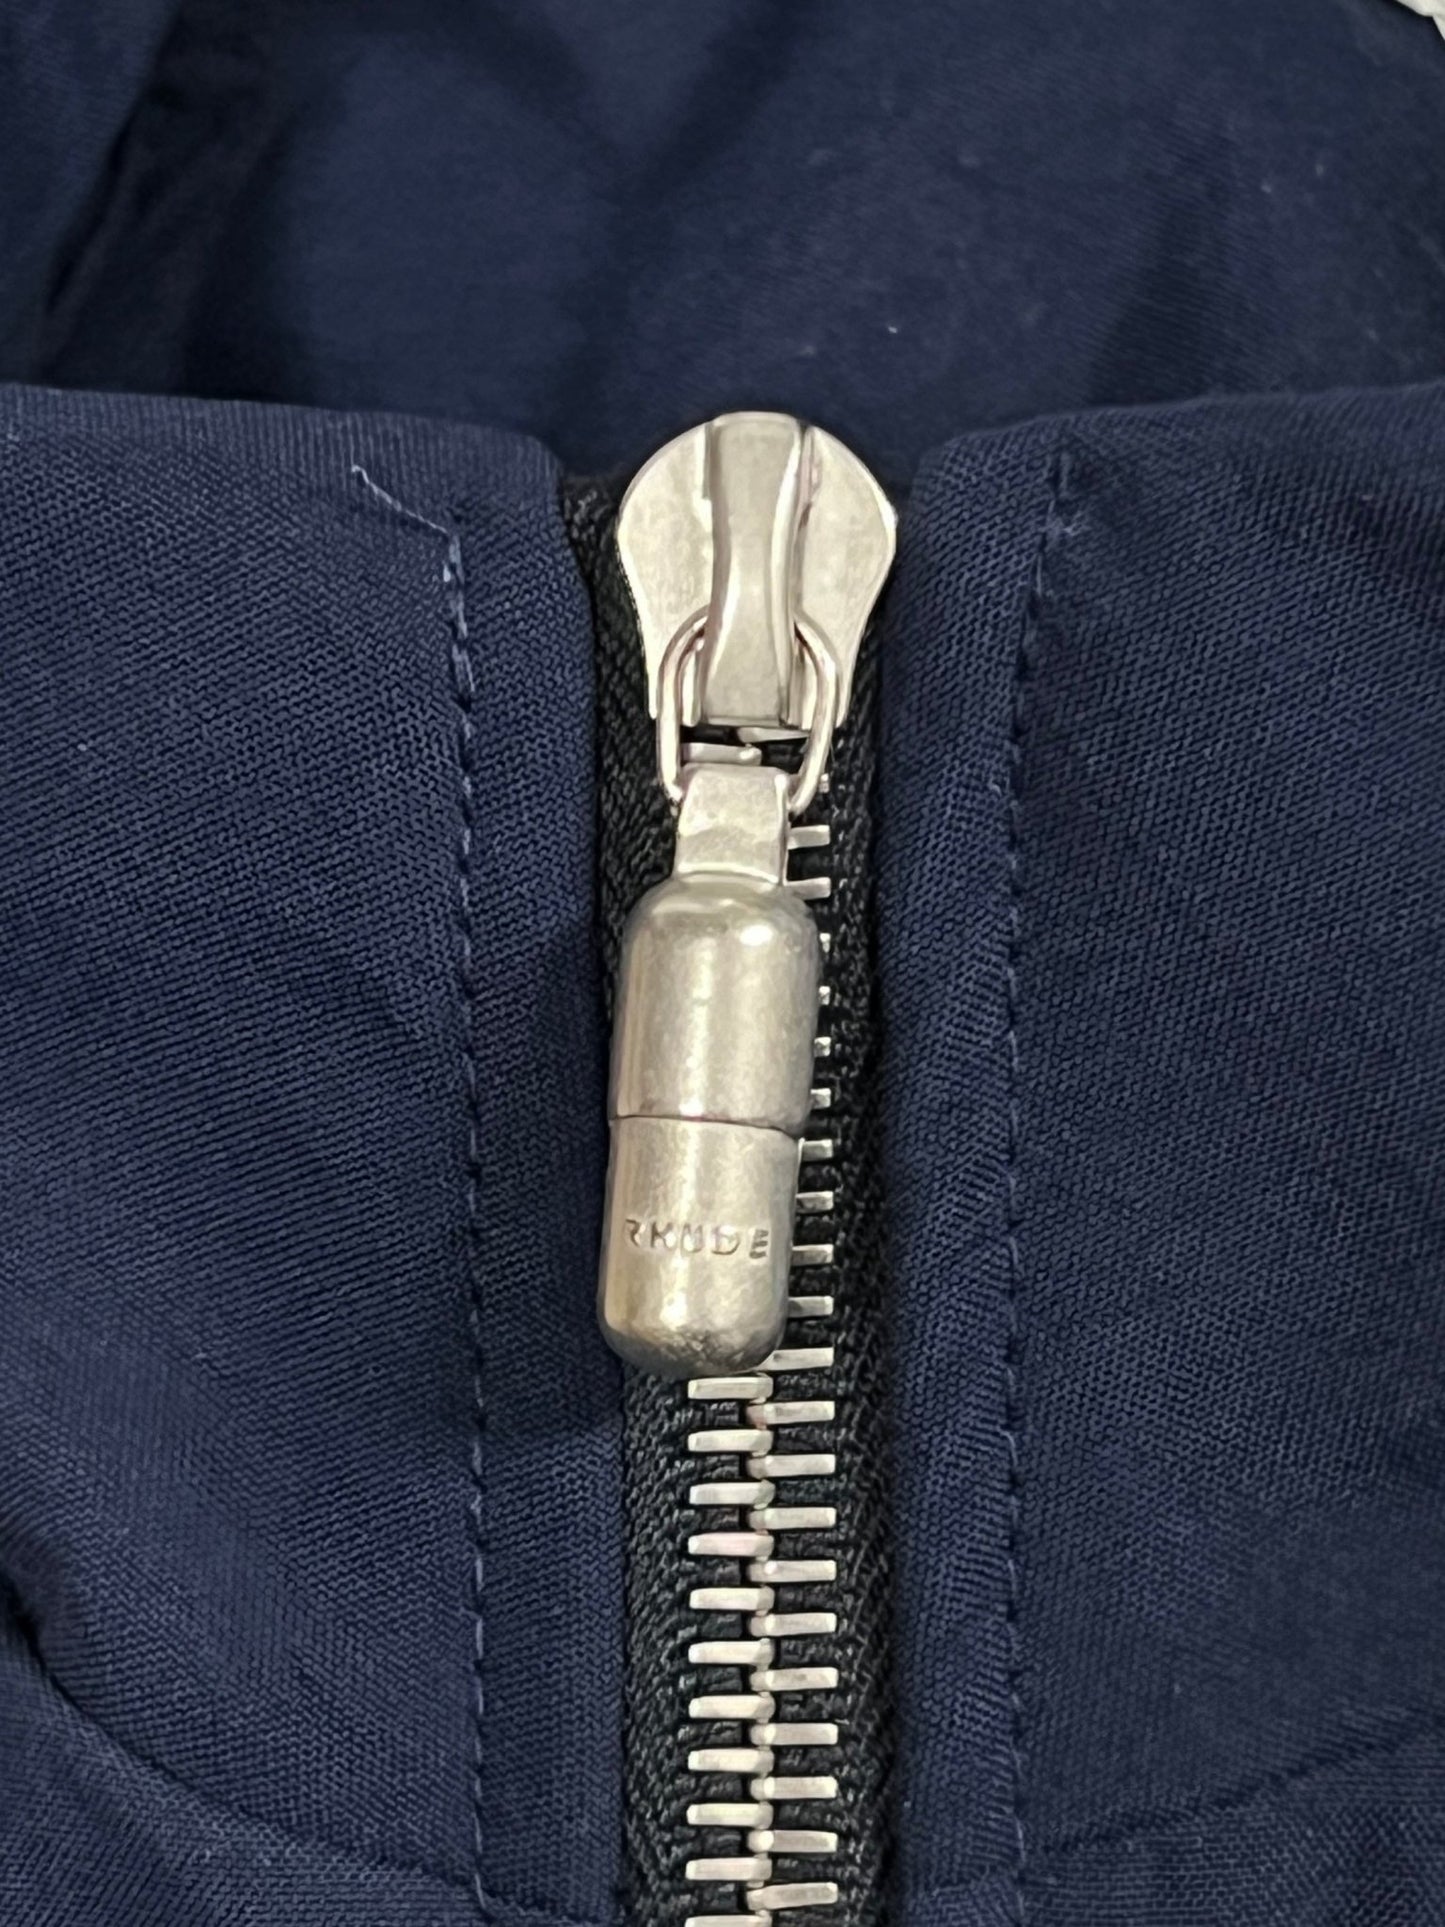 A close up of a zipper with custom RHUDE PALM hardware on a blue RHUDE PALM TRACK JACKET NAVY.